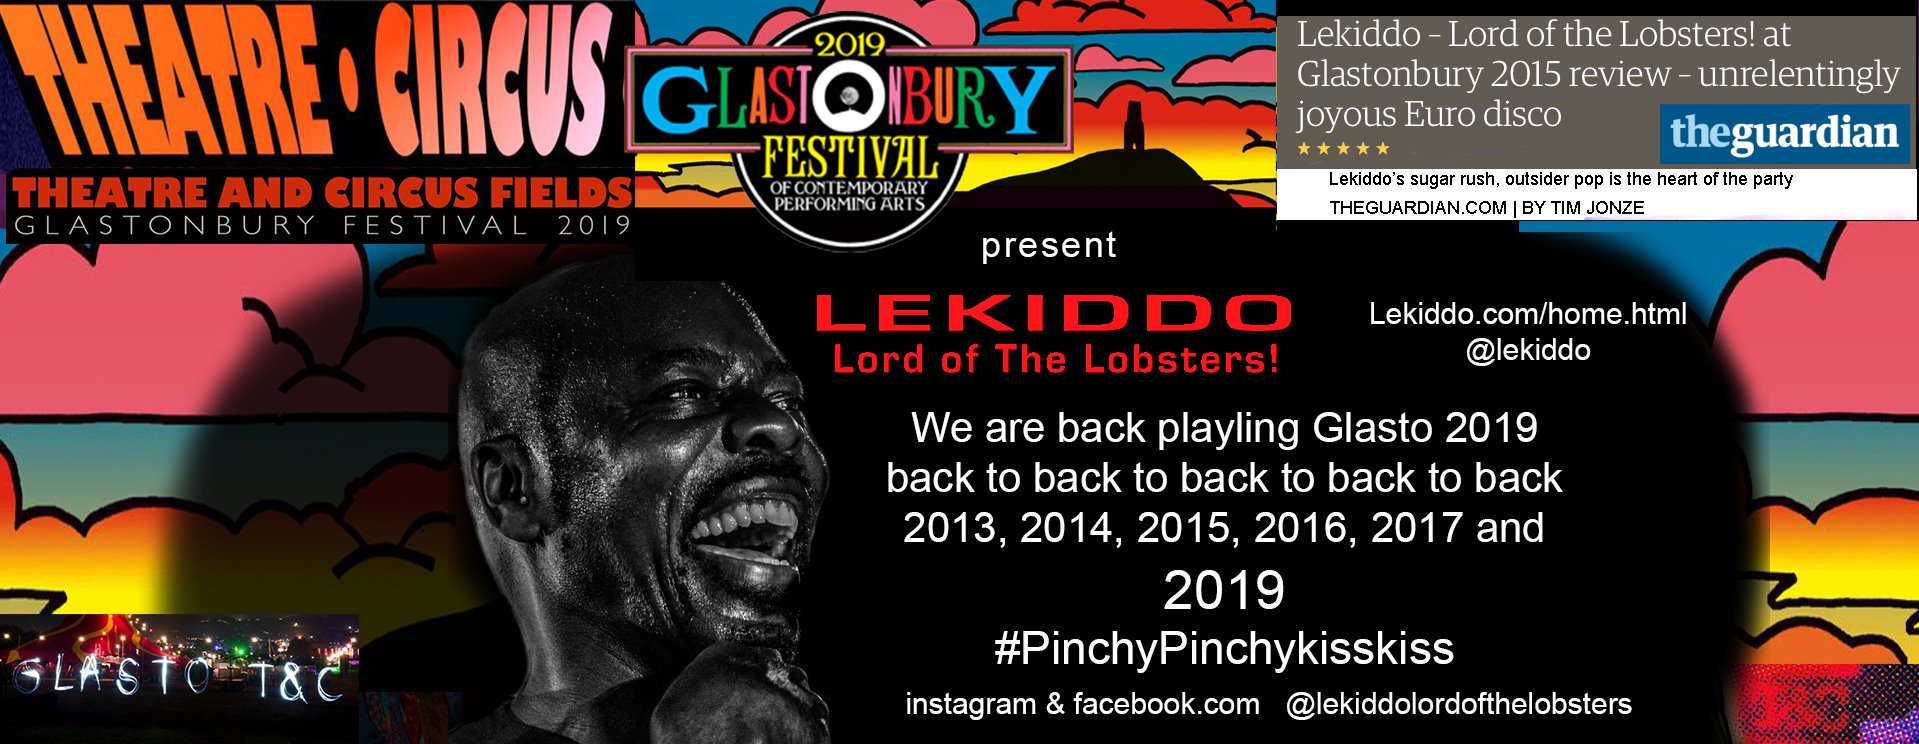 LEKIDDO - Lord of The Lobsters! live at Glastobury Festival 2019 #PinchyPinchykisskiss